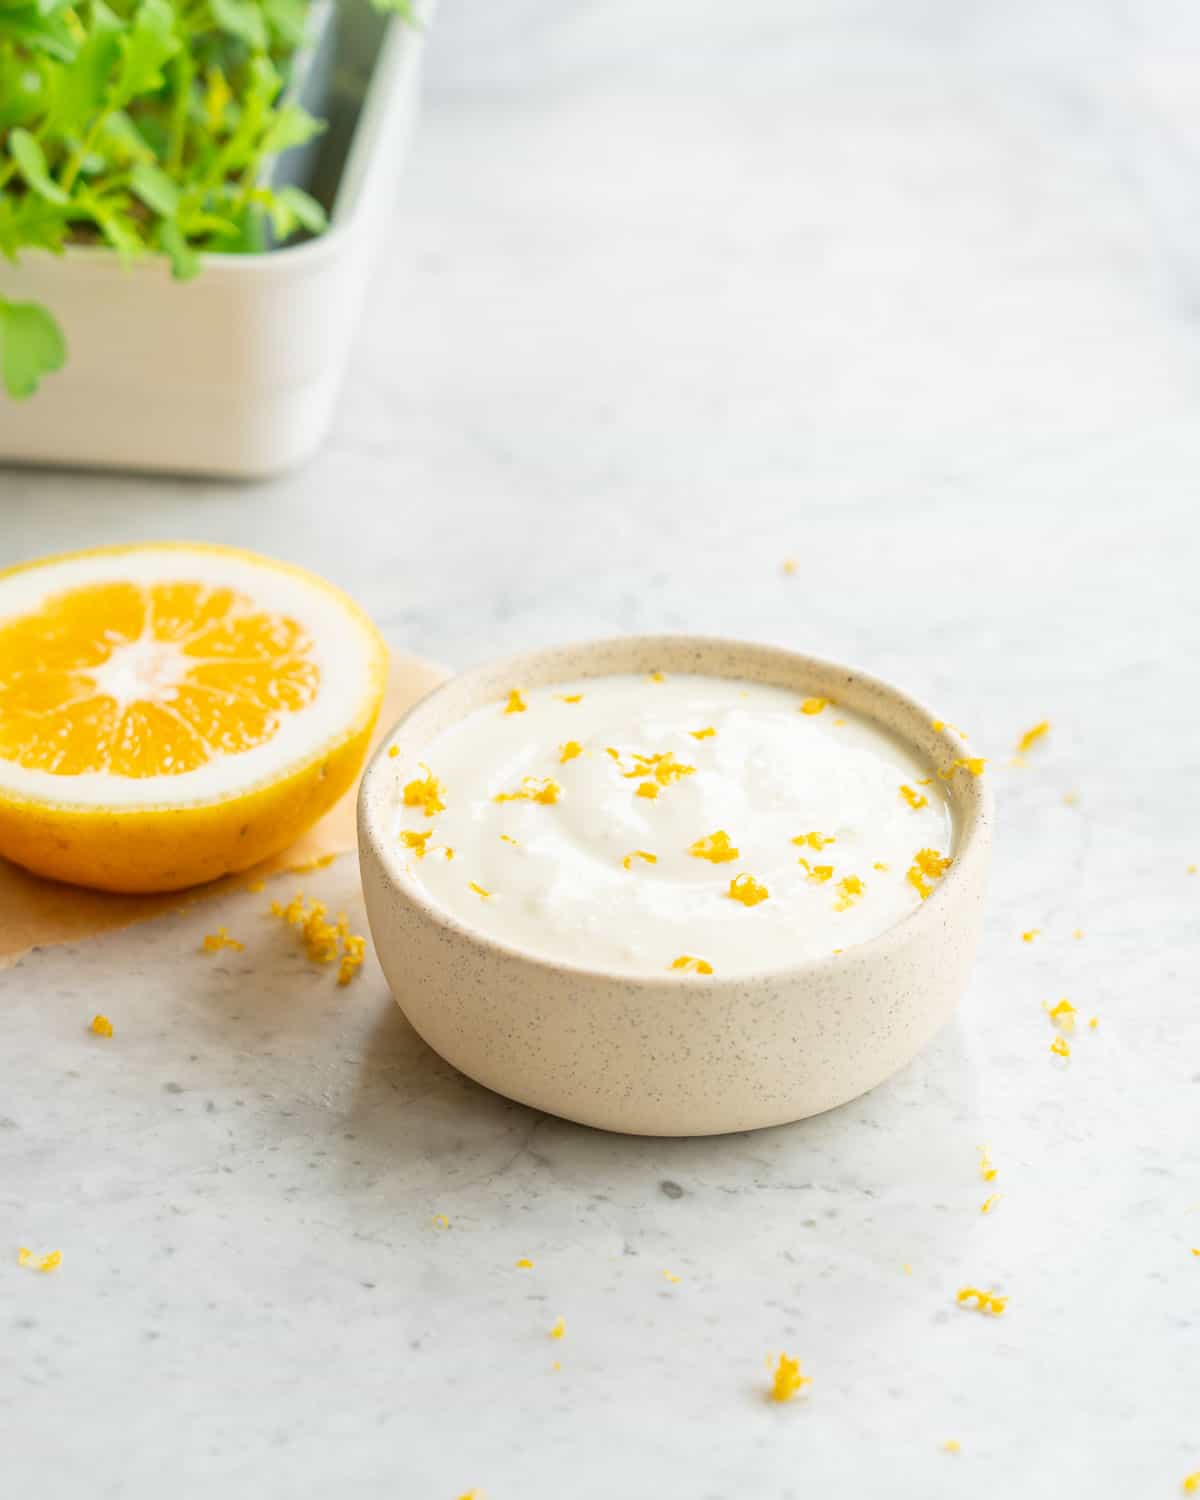 A small ramekin full of lemon feta dip sitting next to a sliced lemon on a bench with a sprinkle of fresh lemon rind 